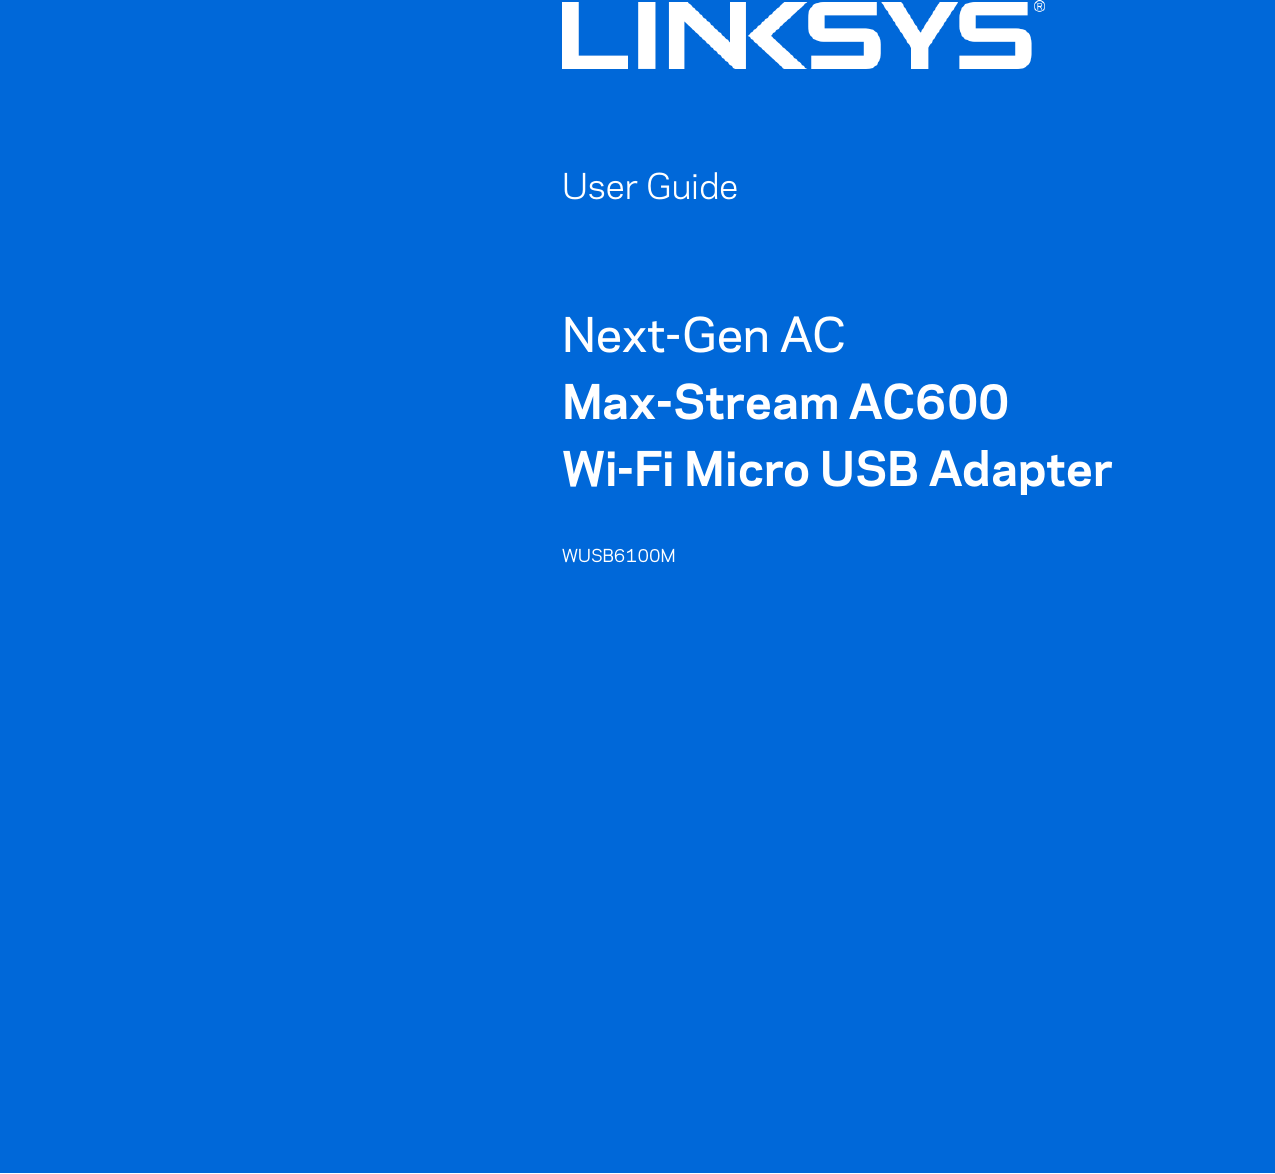             User Guide  Next-Gen AC Max-Stream AC600  Wi-Fi Micro USB Adapter  WUSB6100M    1  